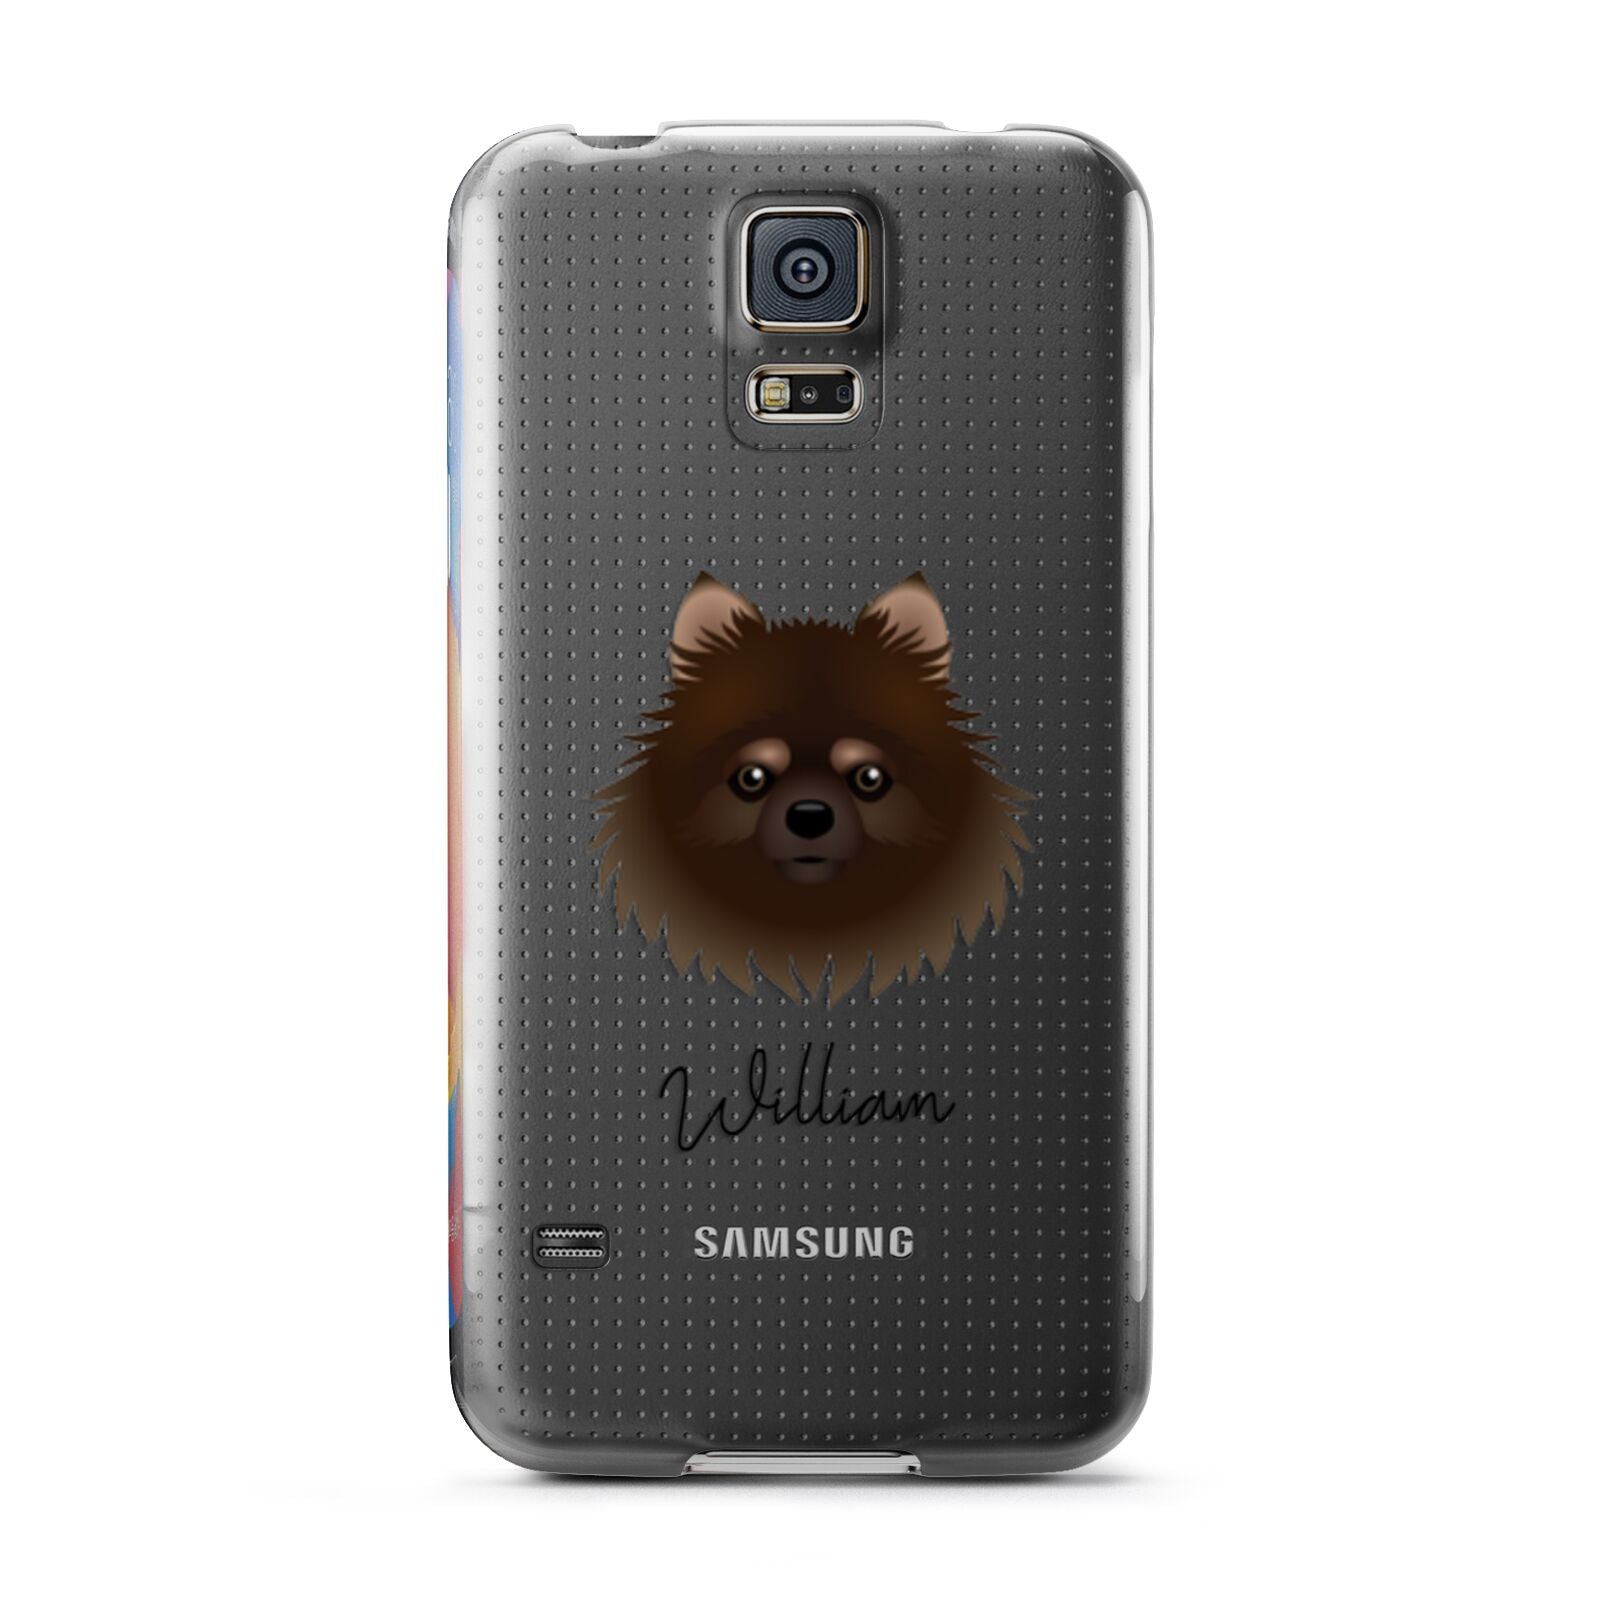 Pomchi Personalised Samsung Galaxy S5 Case